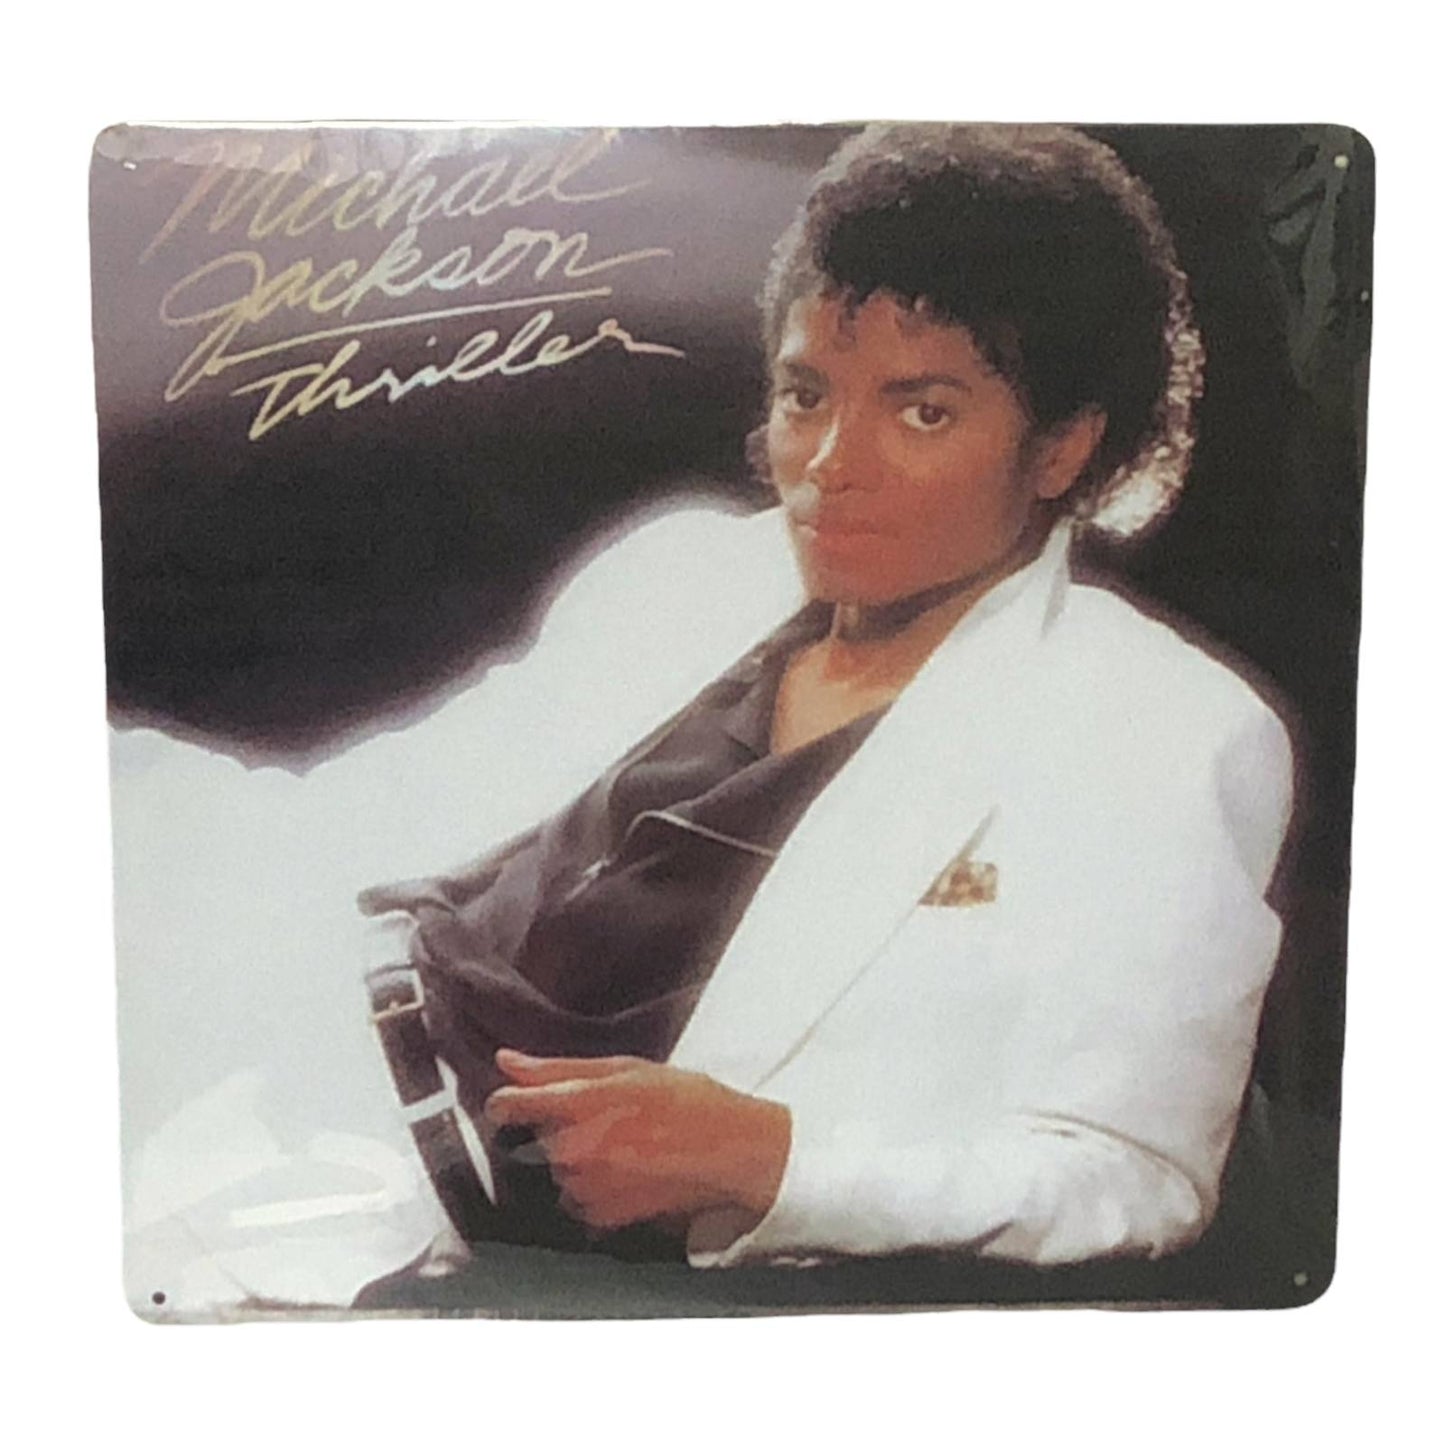 Michael Jackson - Thriller Album Cover Metal Print Tin Sign 12"x 12"